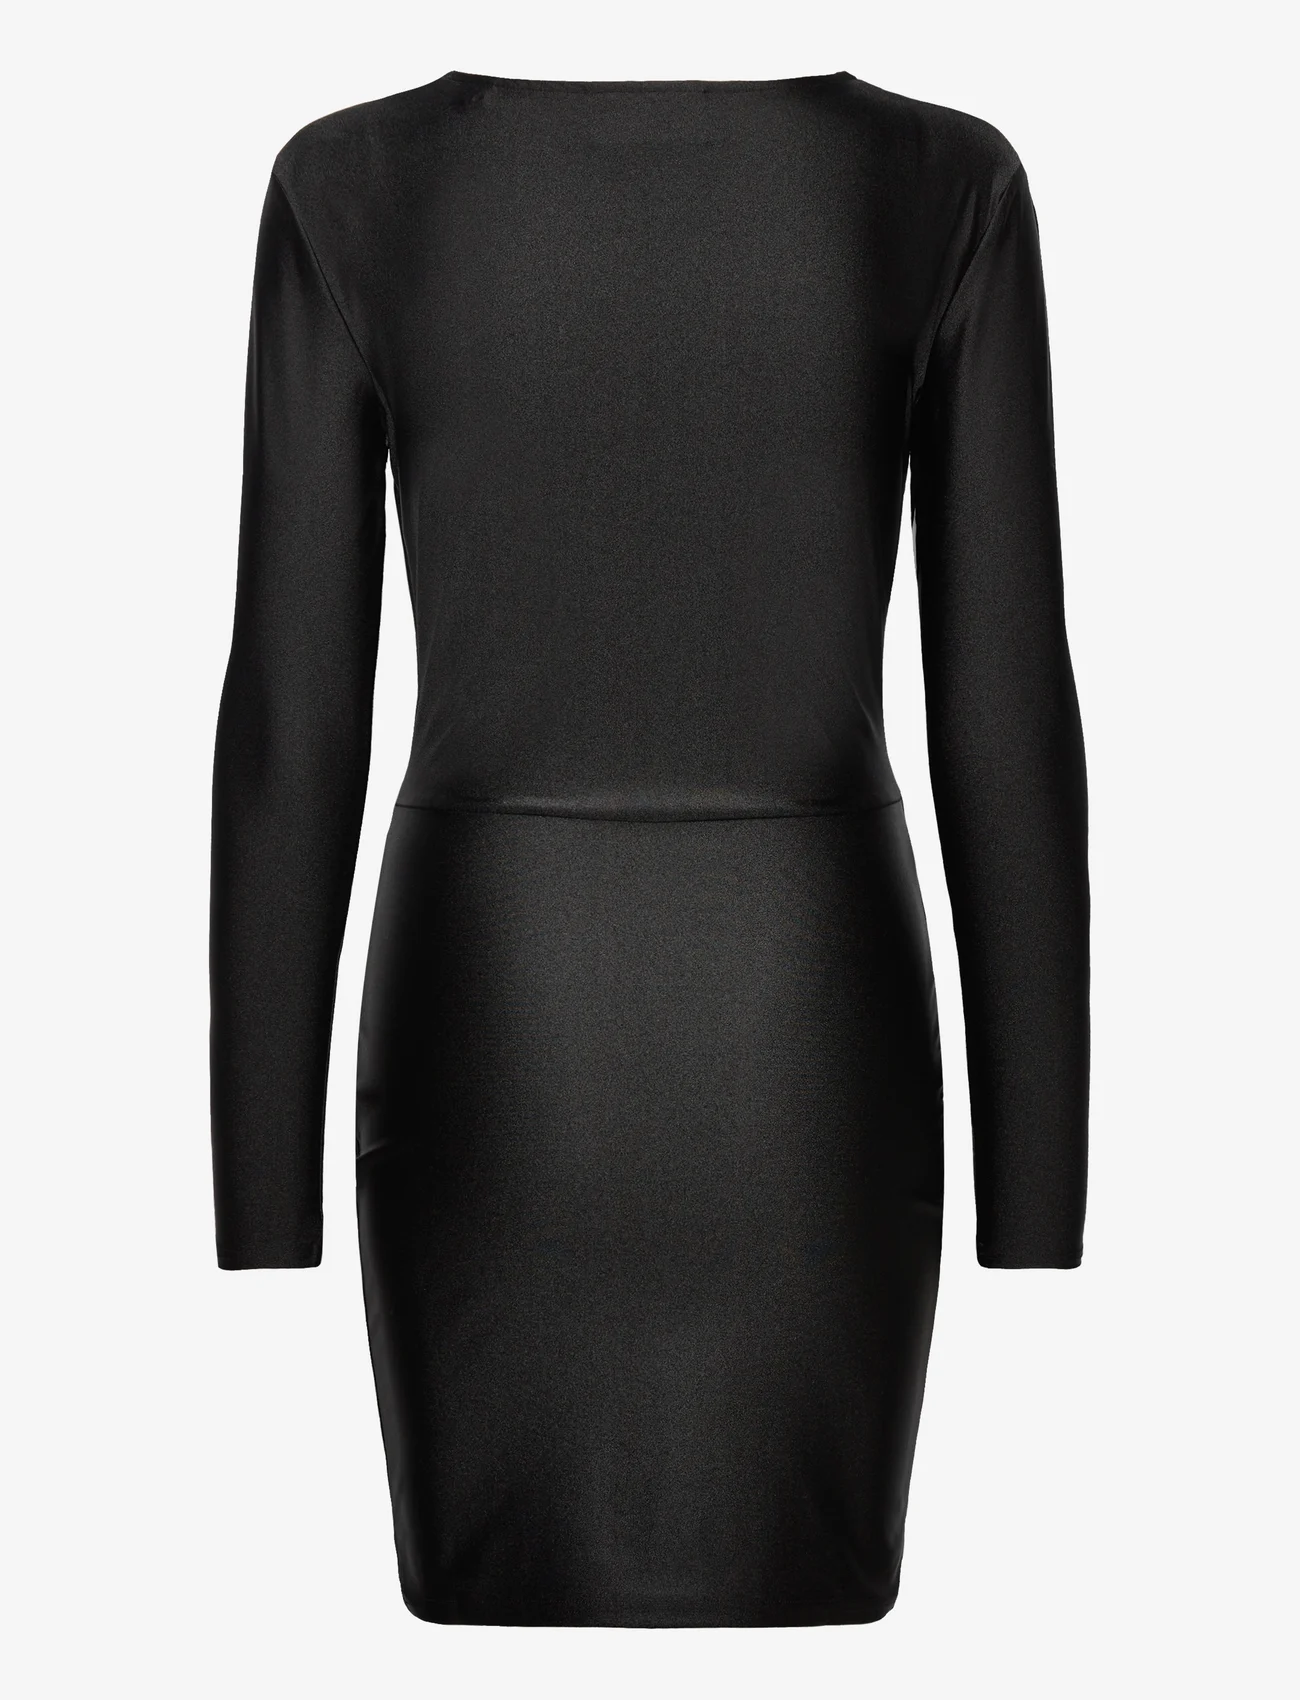 HAN Kjøbenhavn - Stretch Jersey Ruche Cut Out Dress - feestelijke kleding voor outlet-prijzen - black - 1